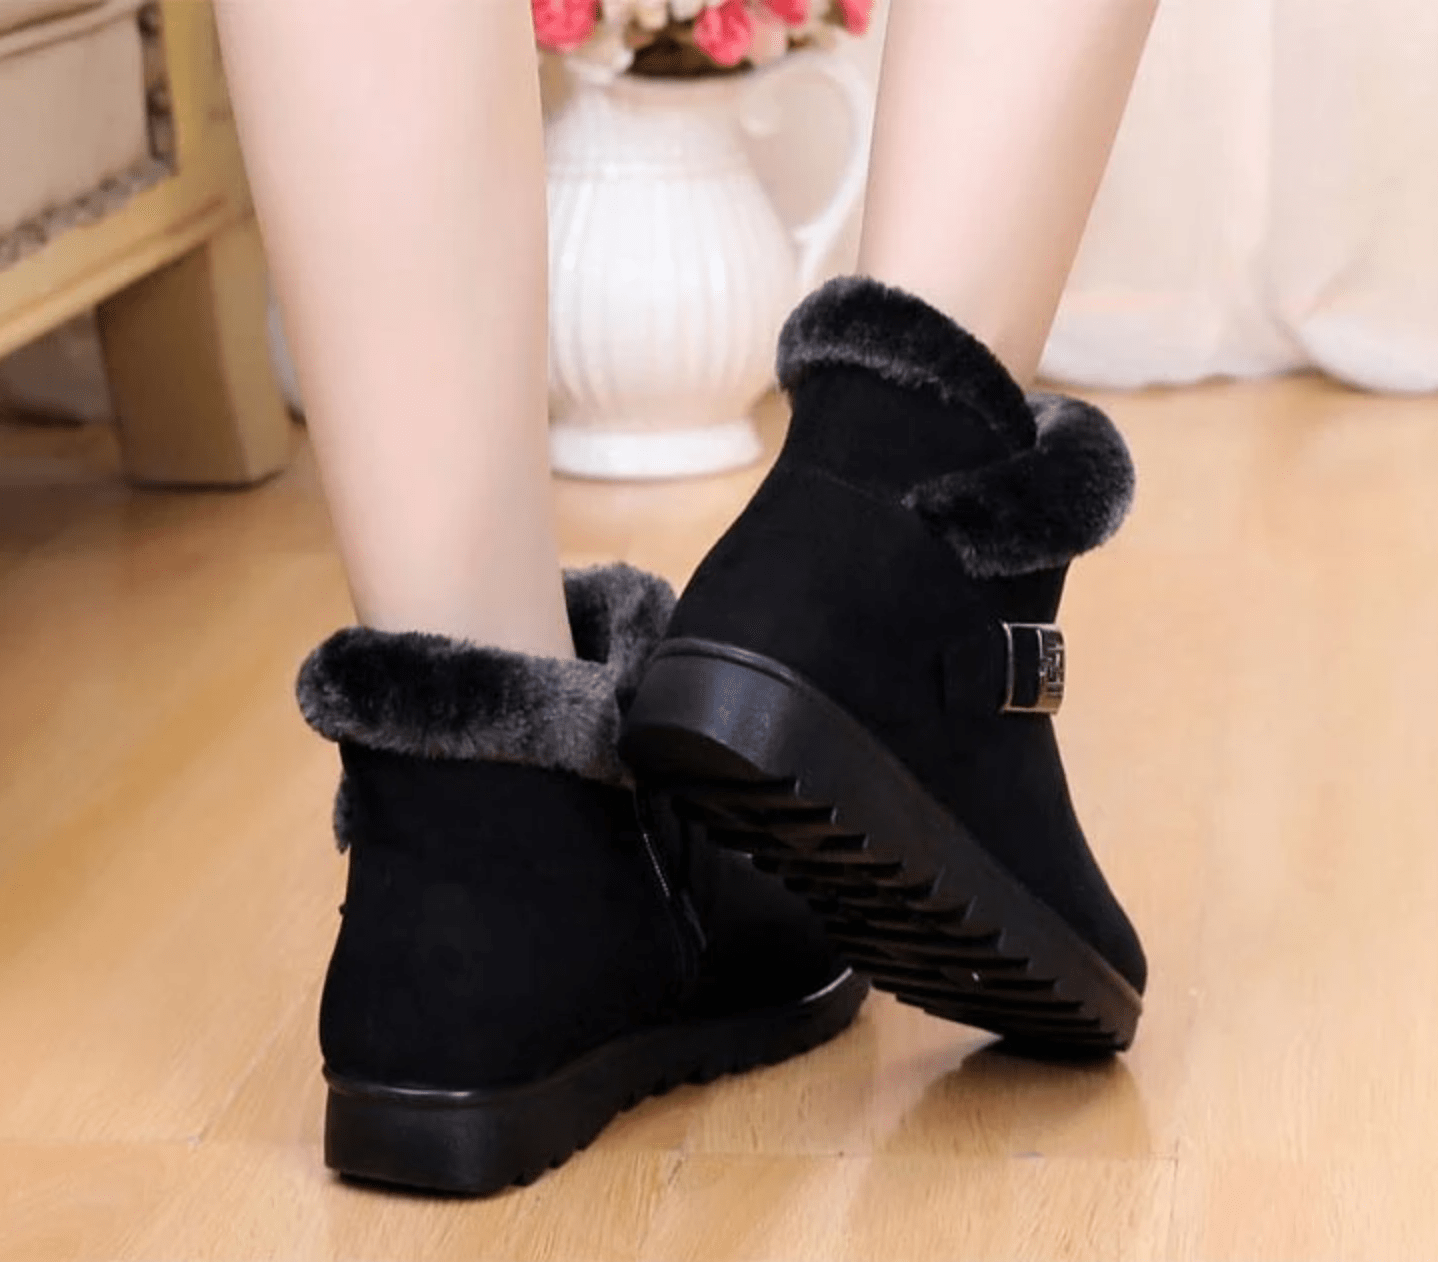 Women's Winter Warm Fur Lining Ankle Boots